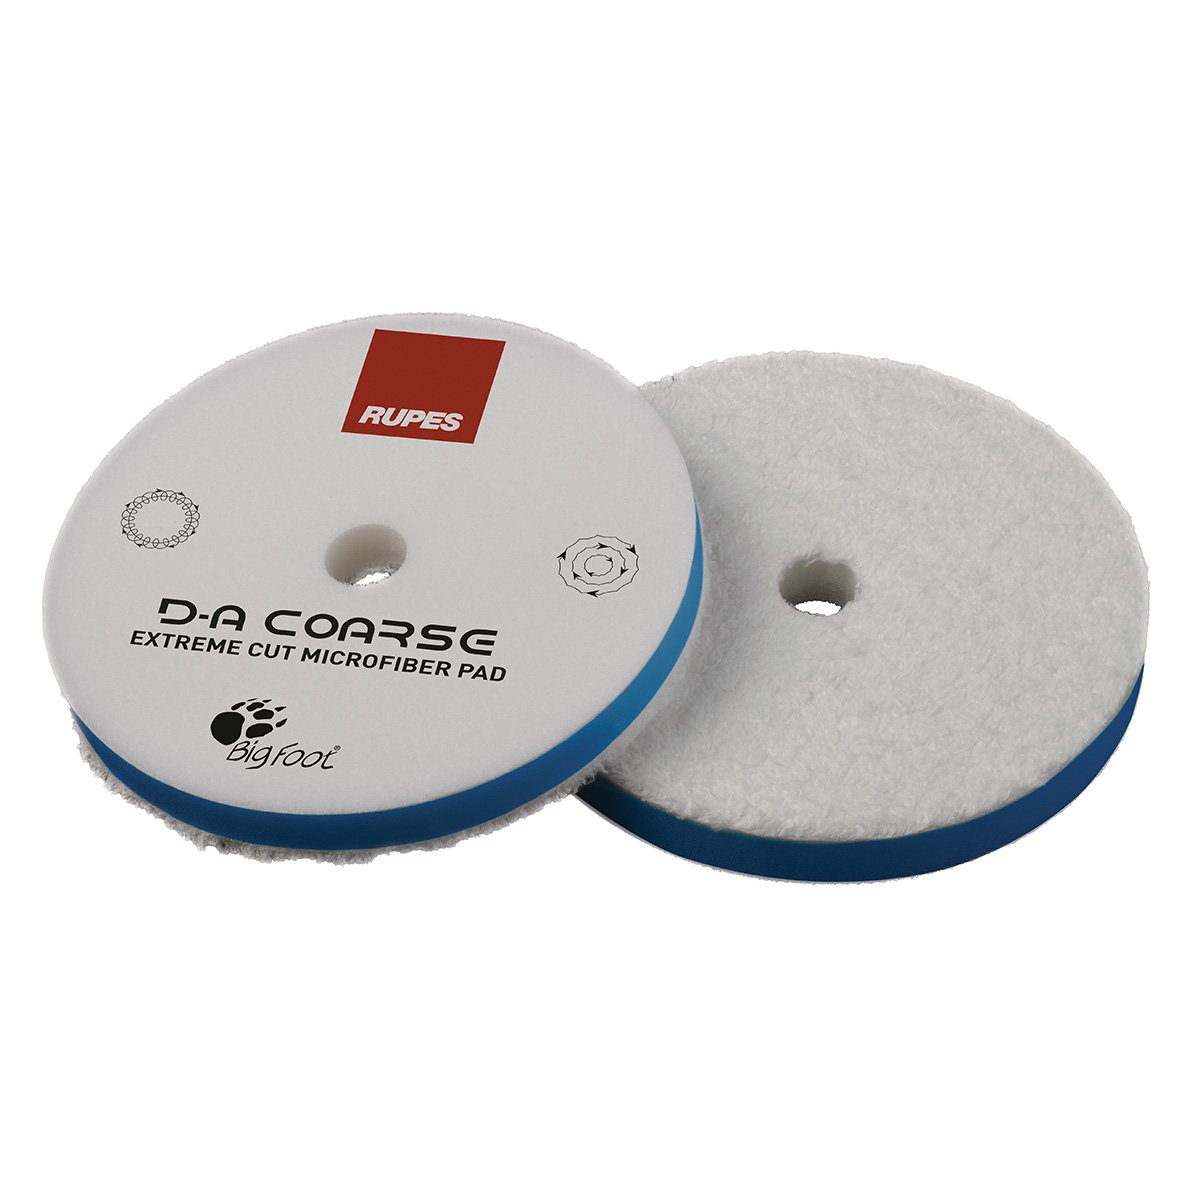 D-A Coarse Extreme Cut Microfiber Pad - 85mm